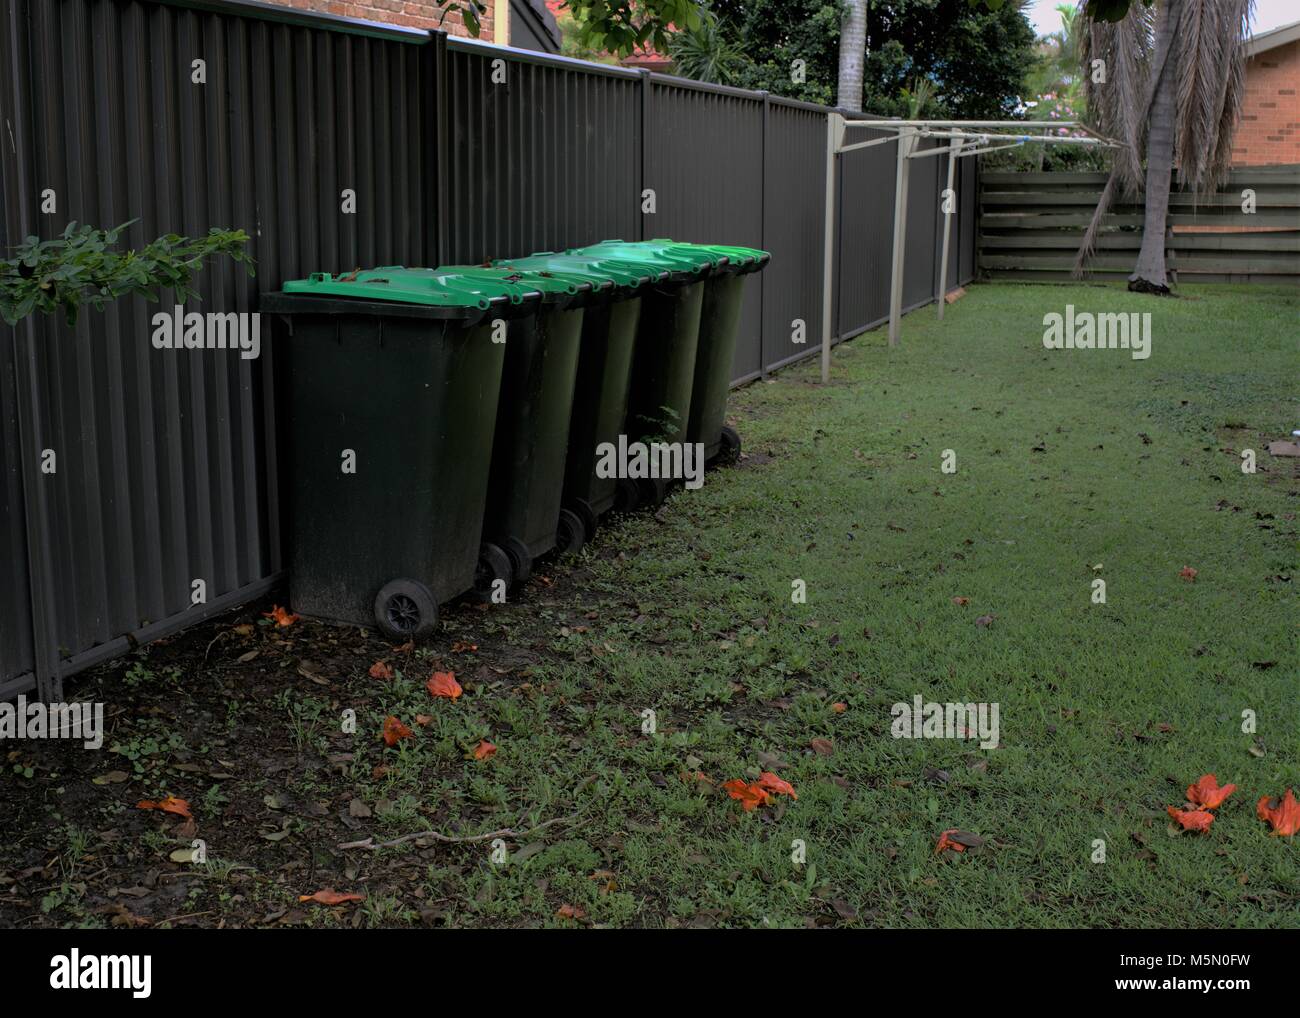 Green bins in yard. Organics bins with wheels. Garden organics bin for garden waste like shrubs, flowers, weeds, sticks, twigs, leaves, branches Stock Photo